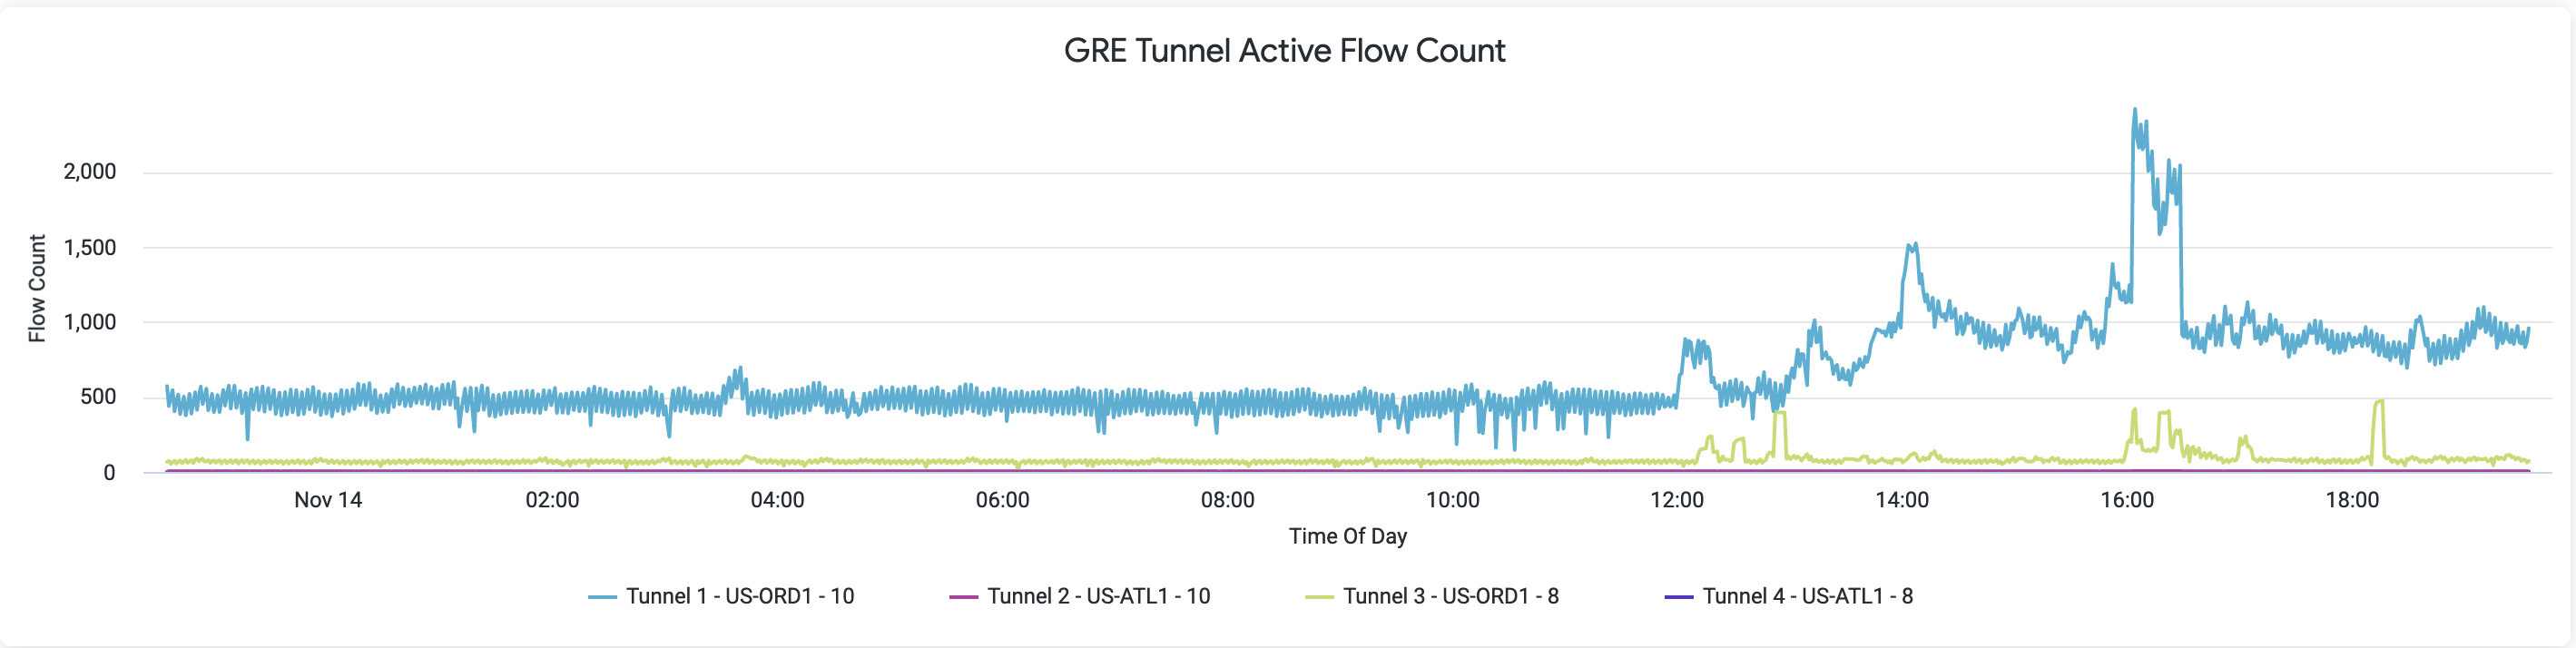 Netskope-DEM-GRE-Tunnel-Active-Flow-Count.png